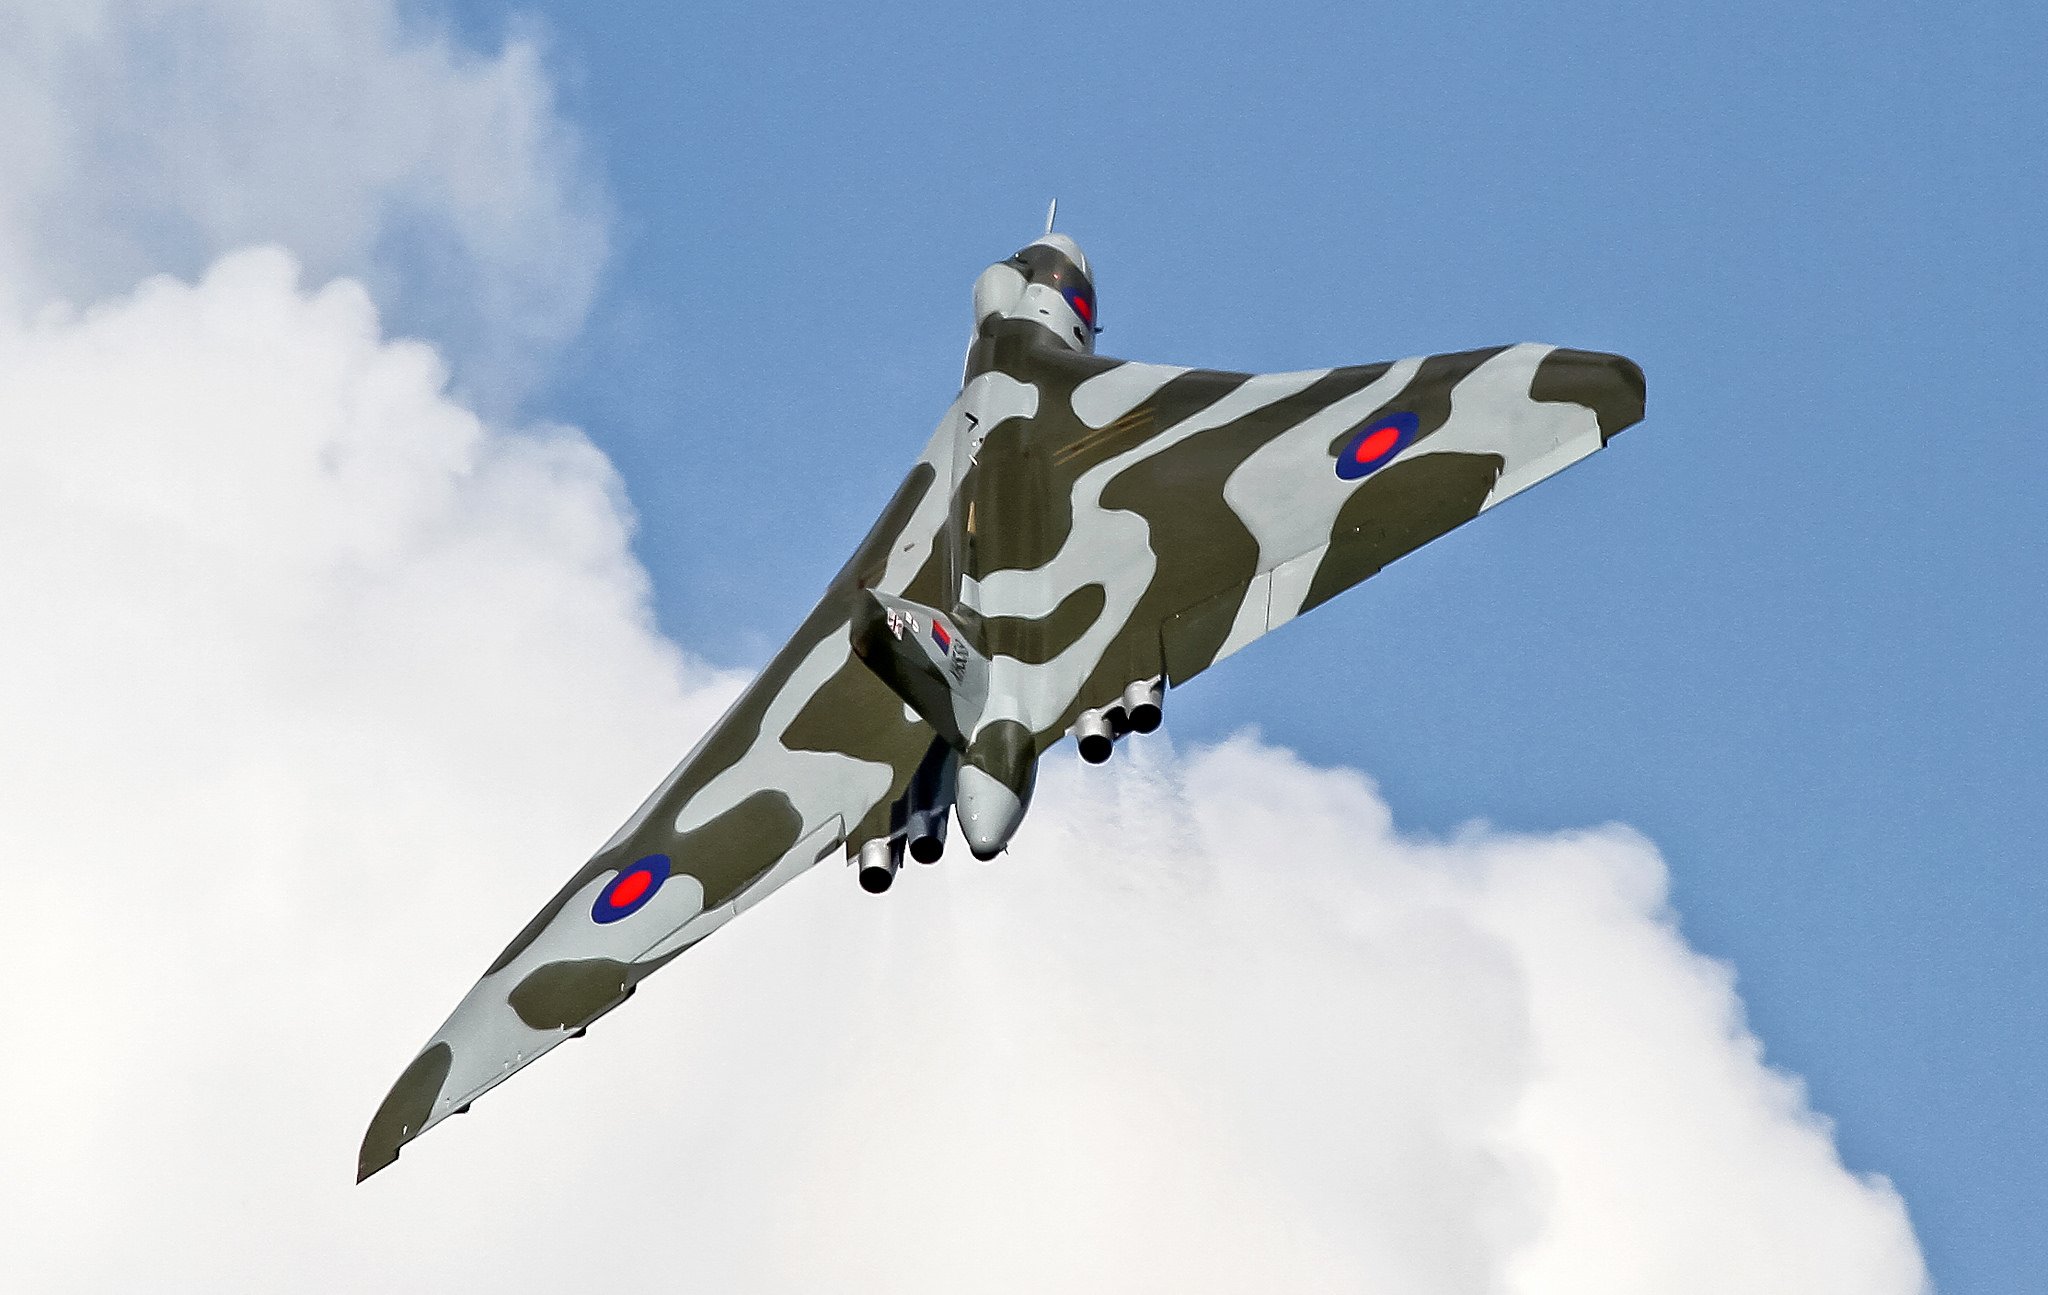 hawker, Siddeley, Vulcan, B 2, Avro, Royal, Air, Force, England, Delta, Wing, Strategic, Bomber, Aircrafts Wallpaper